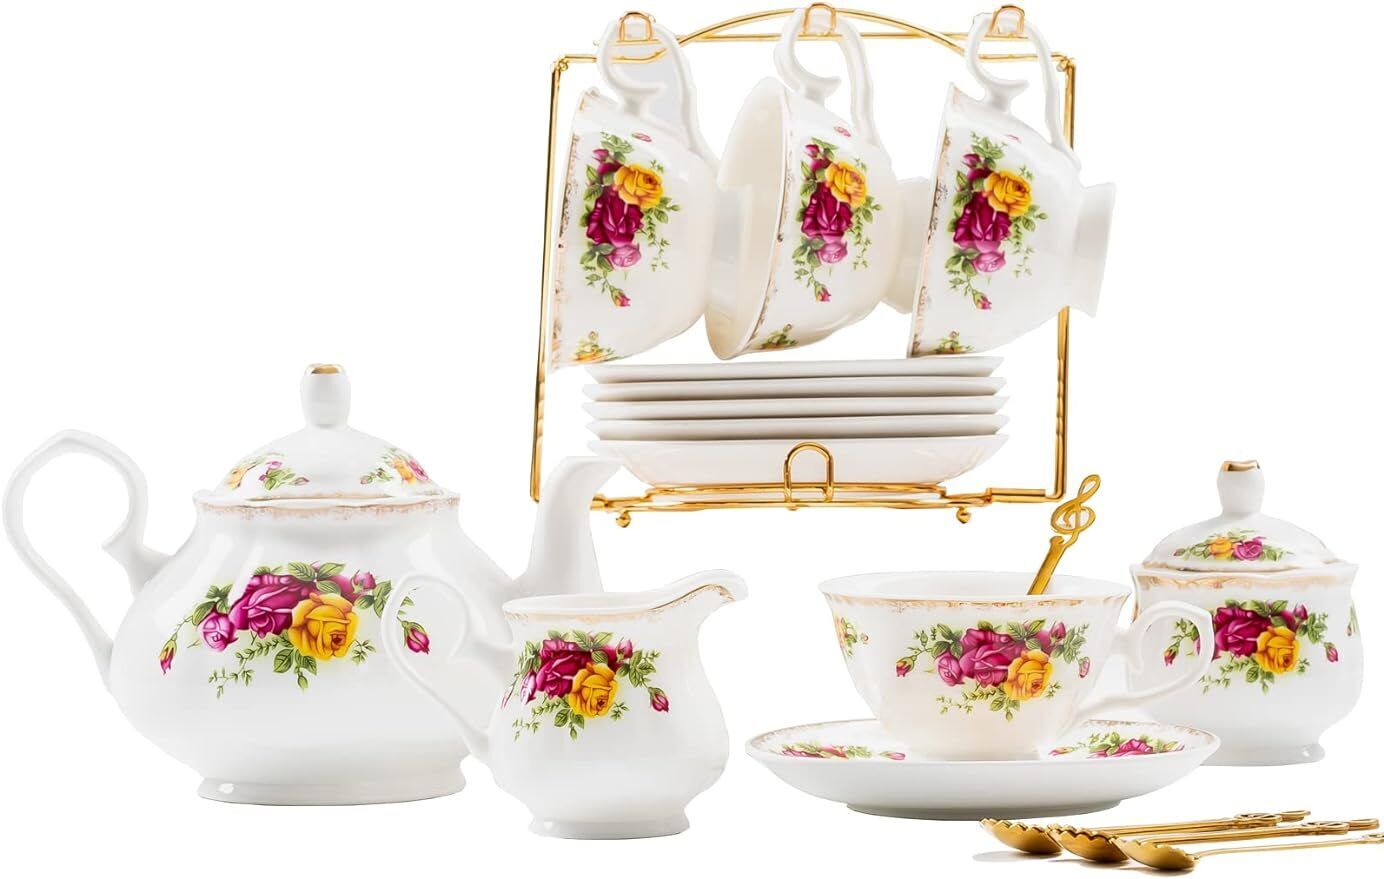 22-Pieces Porcelain Tea SetVintage Floral Tea Gift Sets,Cups&SaucerService for 6